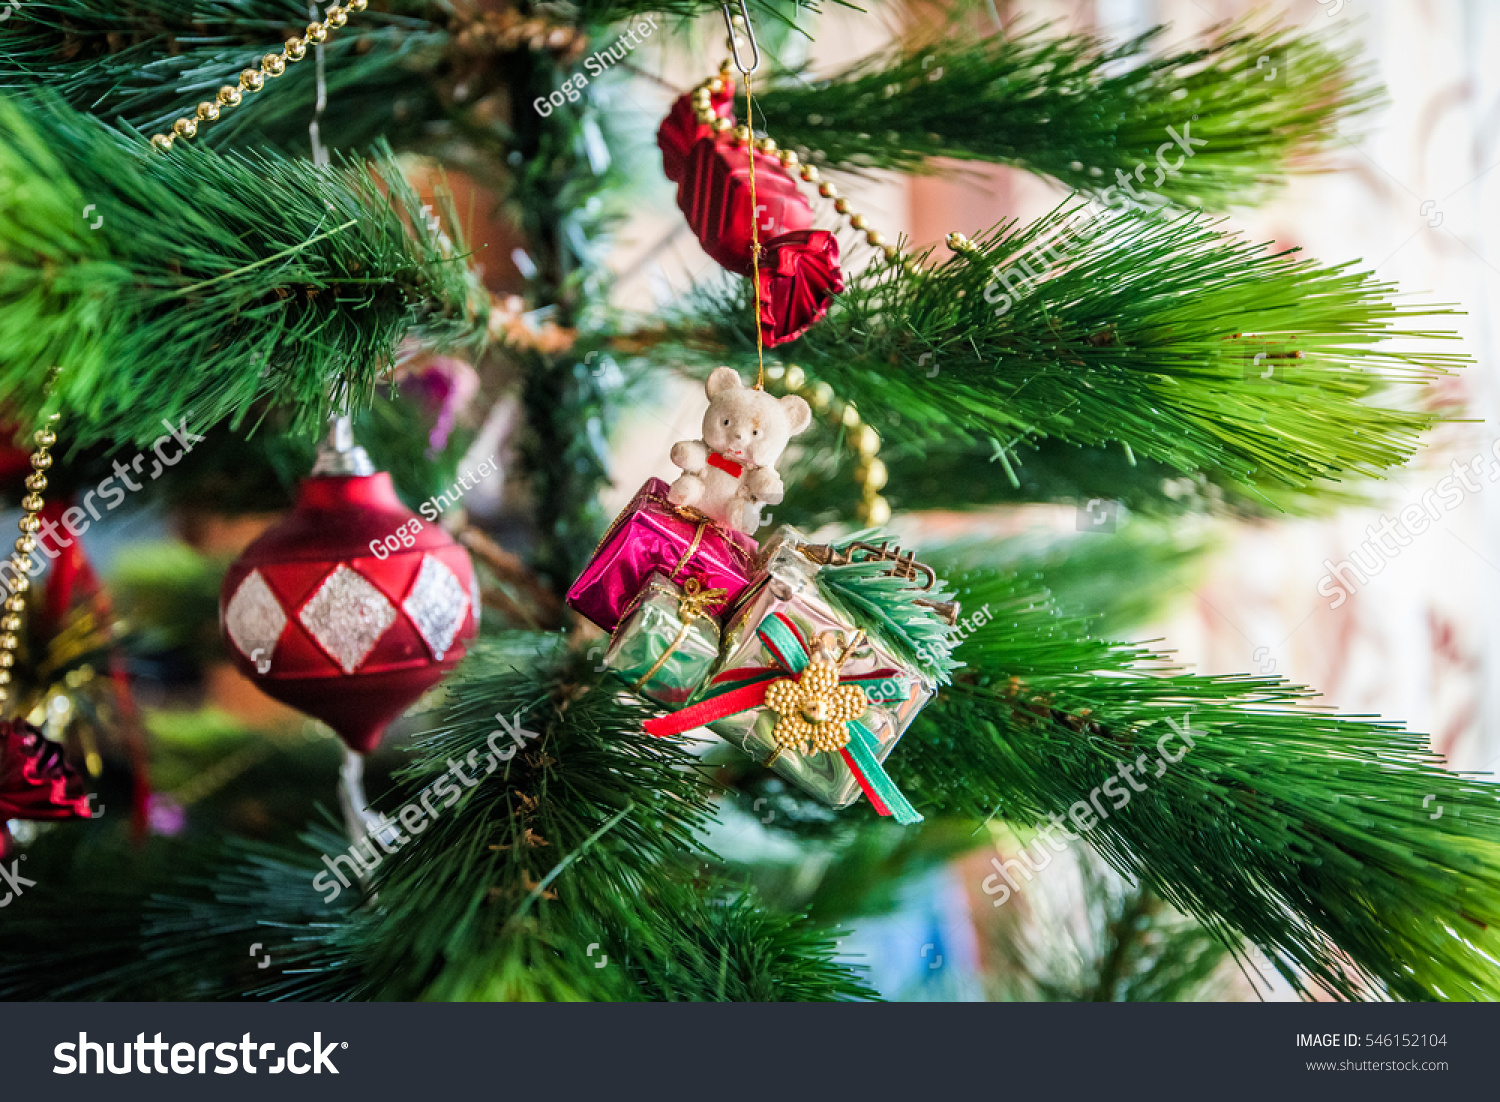 Decoration New Year Tree Stock Photo 546152104 - Shutterstock